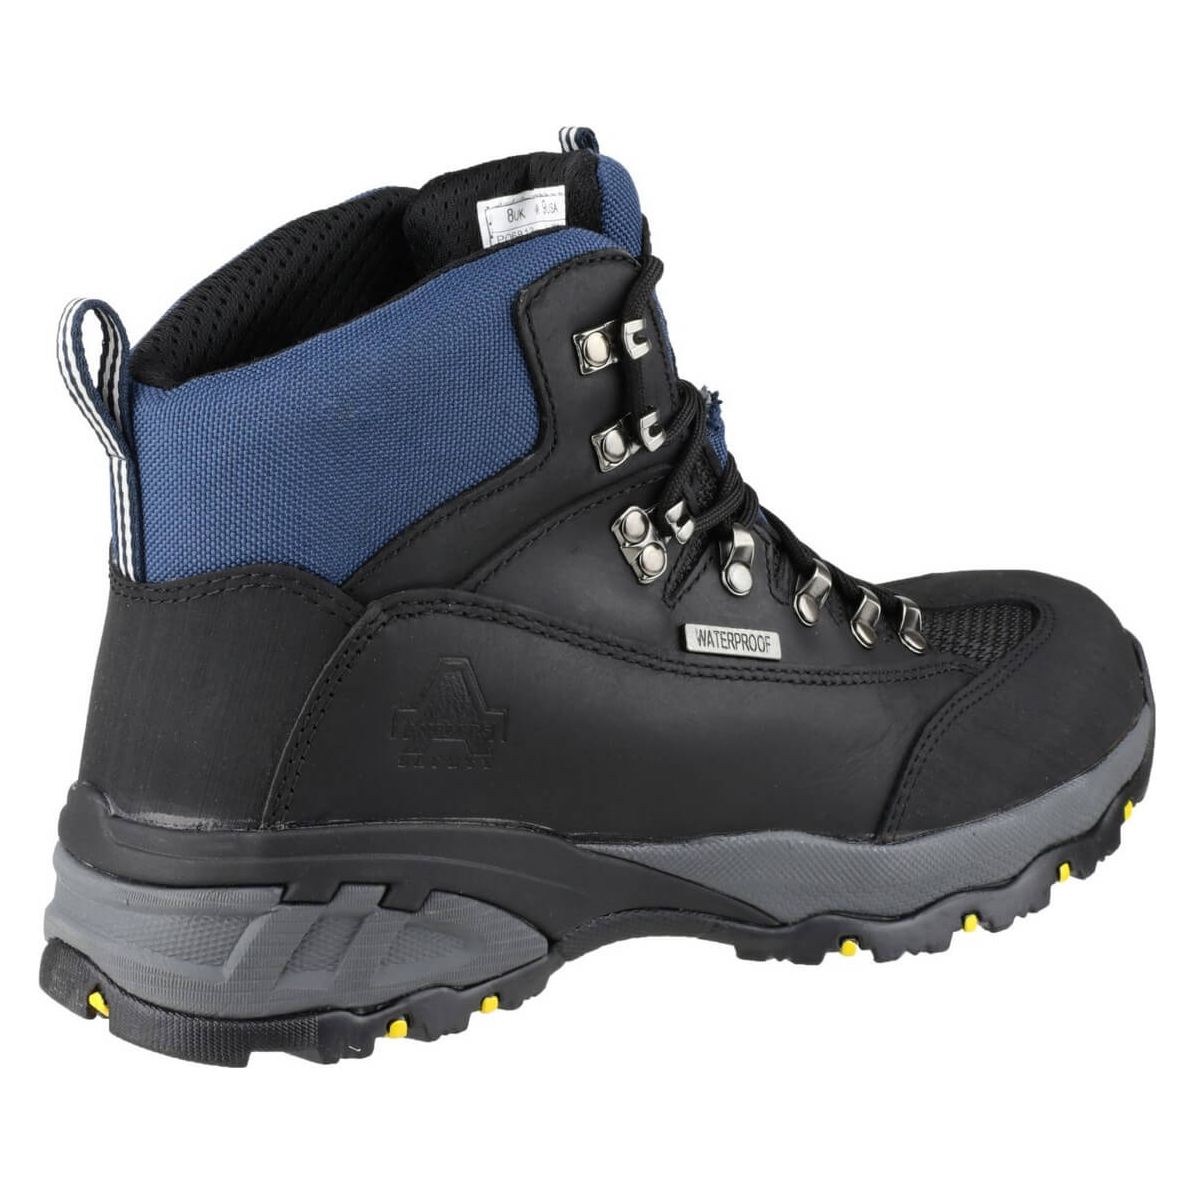 Amblers Fs161 Waterproof Safety Hiking Boots Mens - workweargurus.com